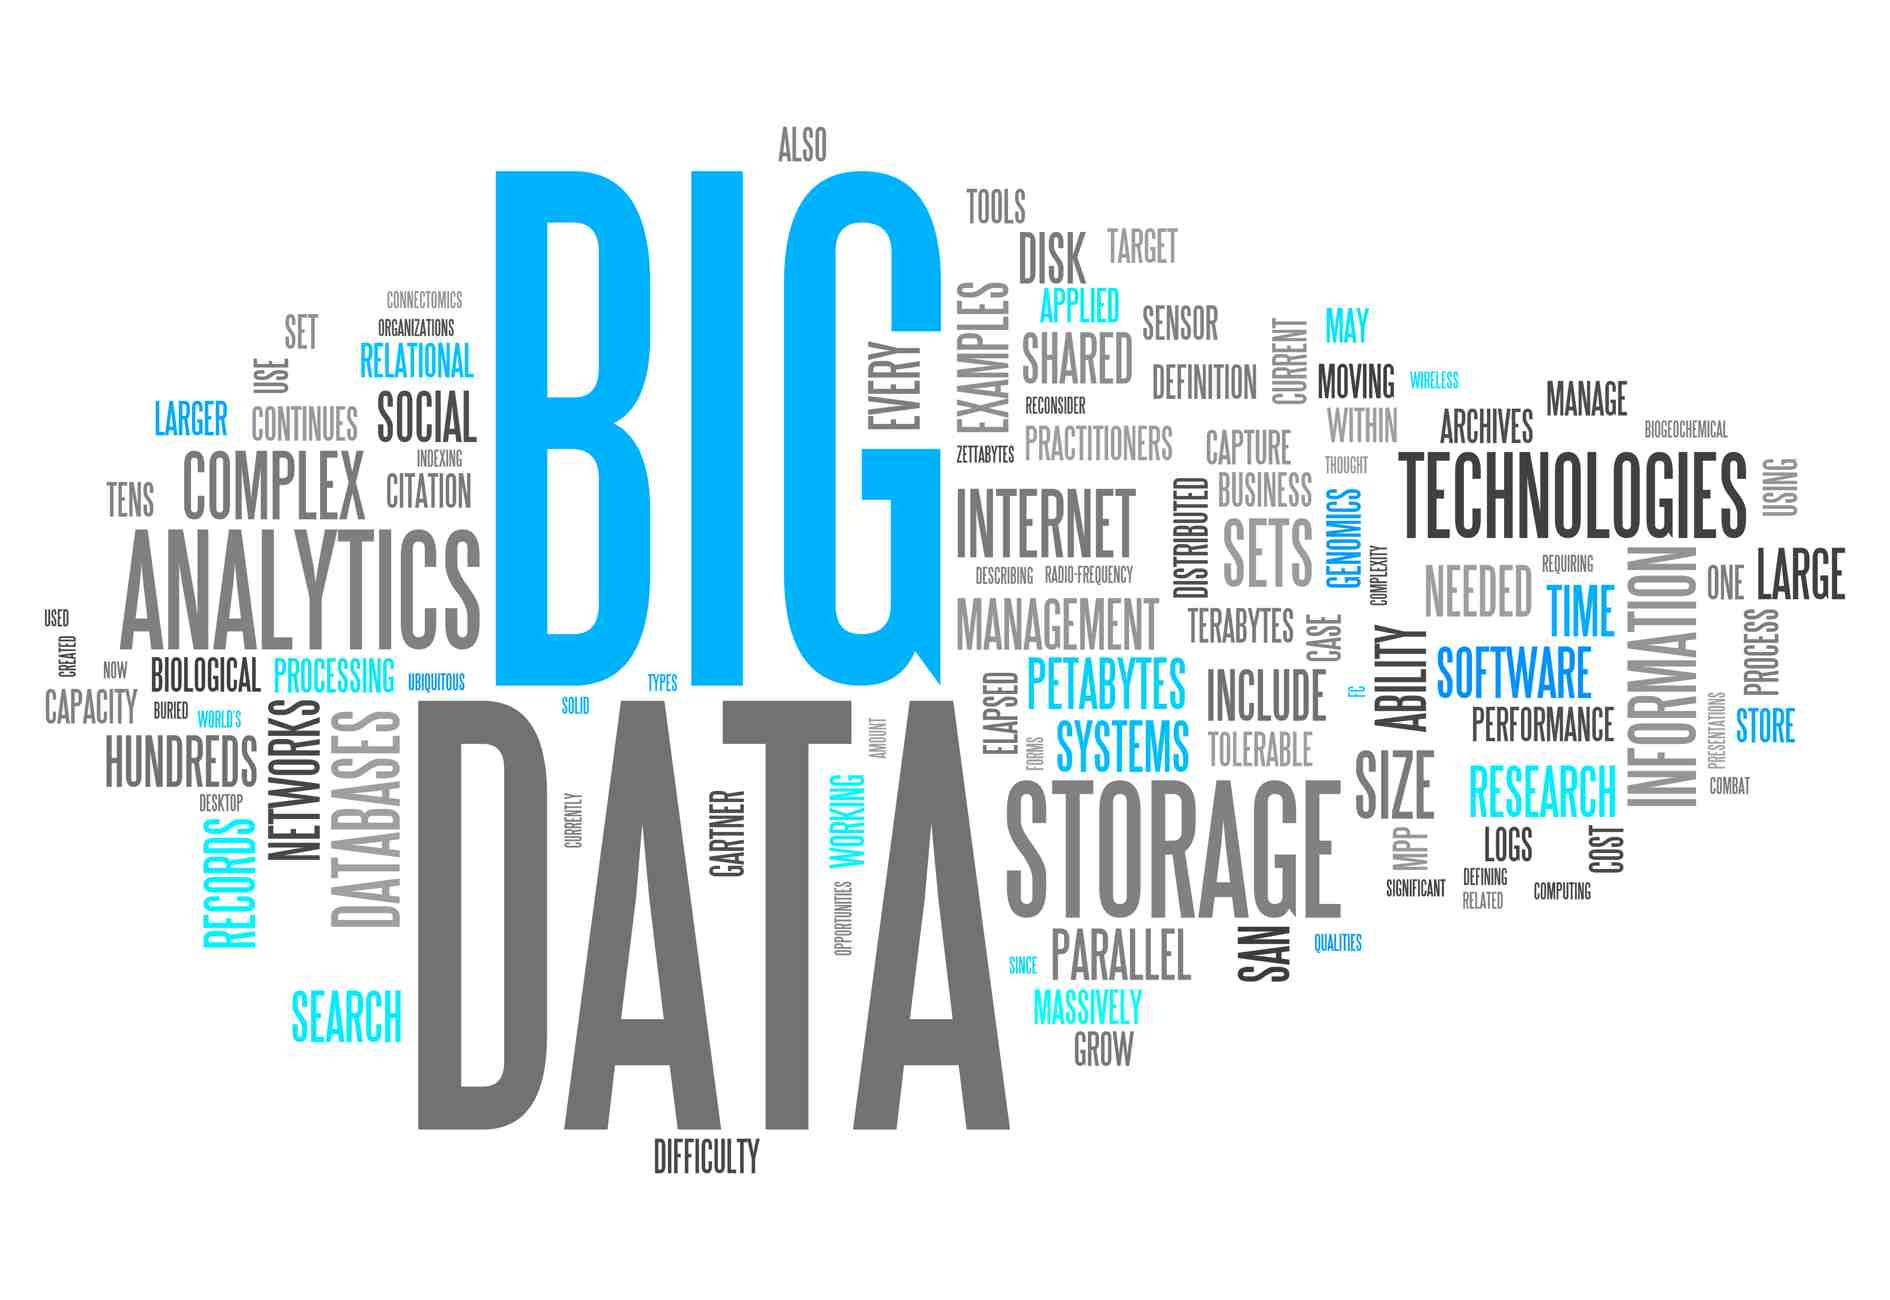 Big-Data